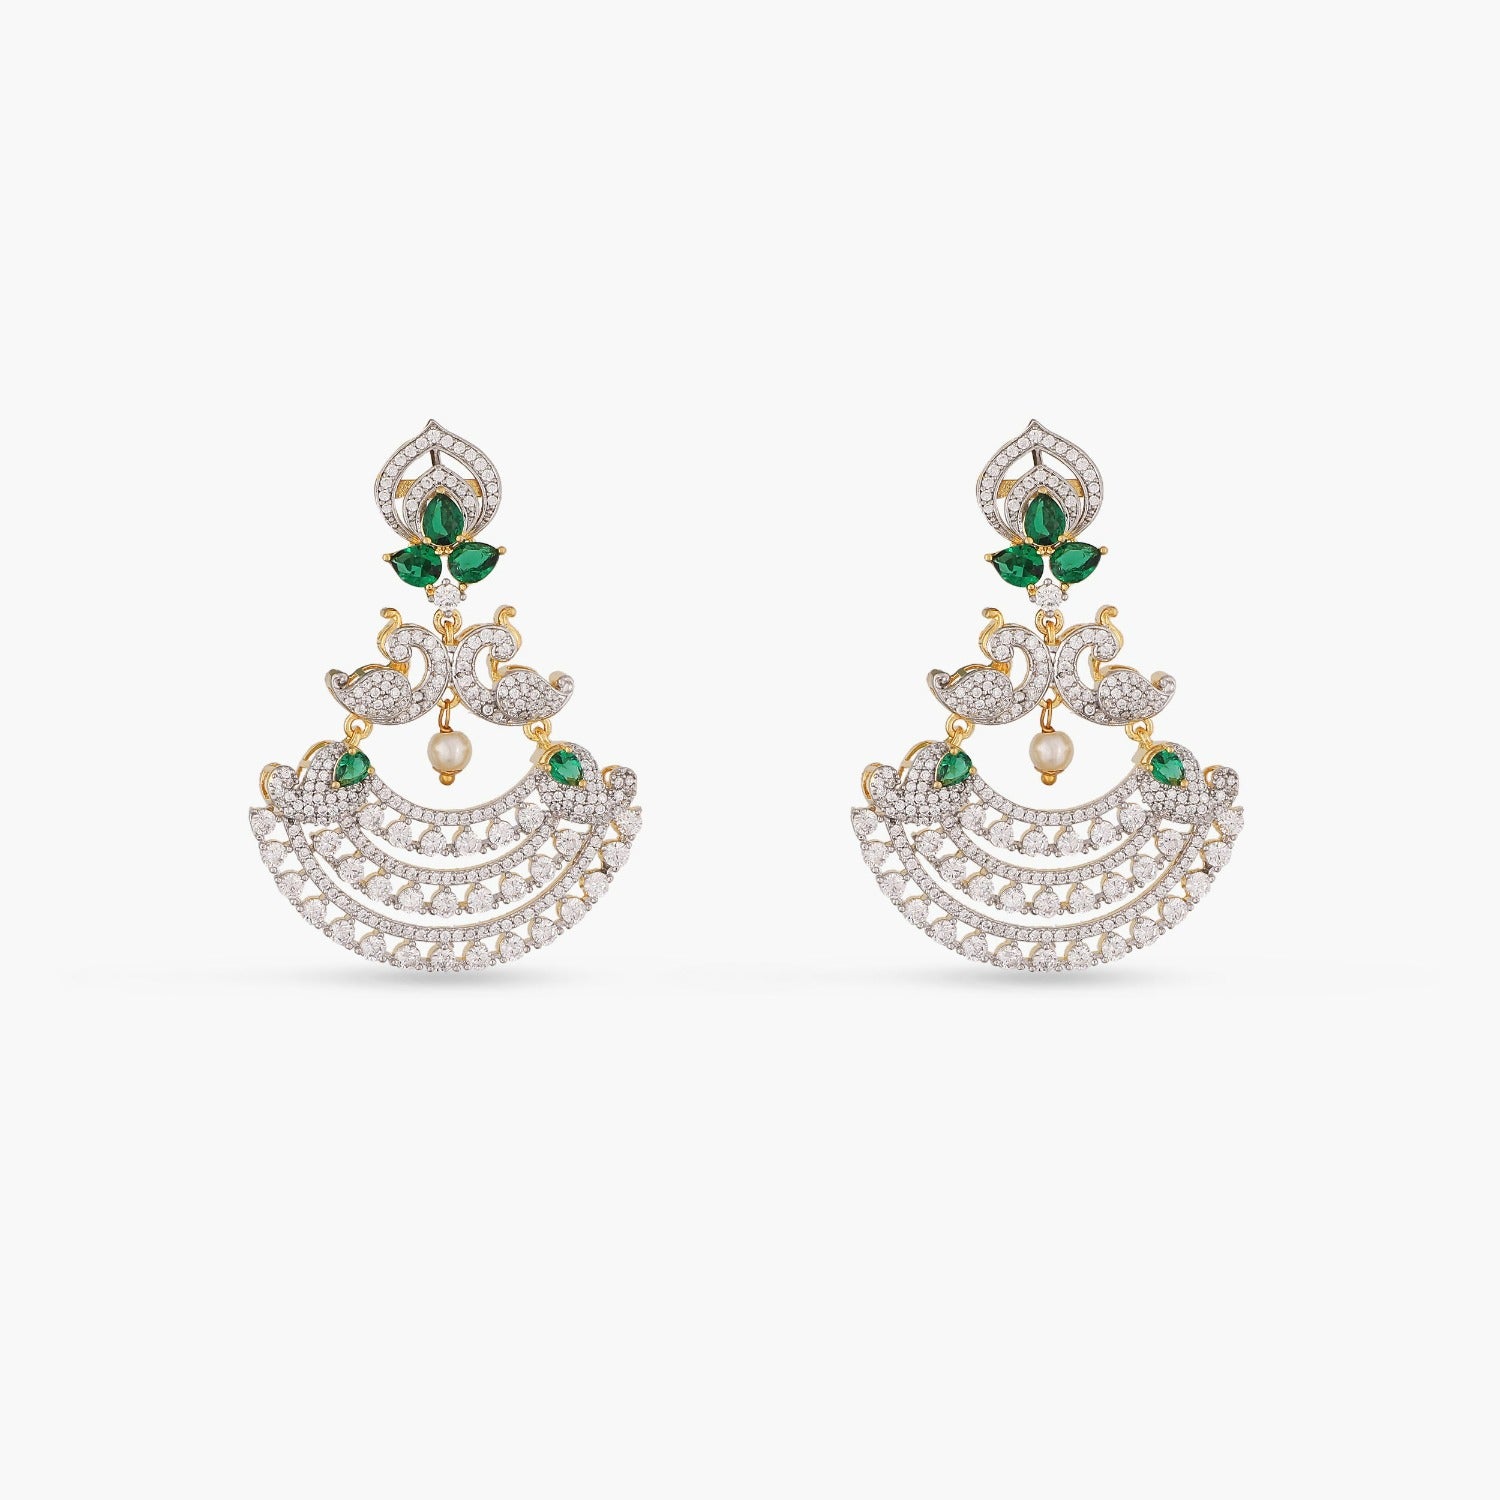 E.B.belle Elegant Women's Stainless Steel Square Geometric Hoop Earrings  Micro-paved Zircon Small Pearl Gold Plated Earring